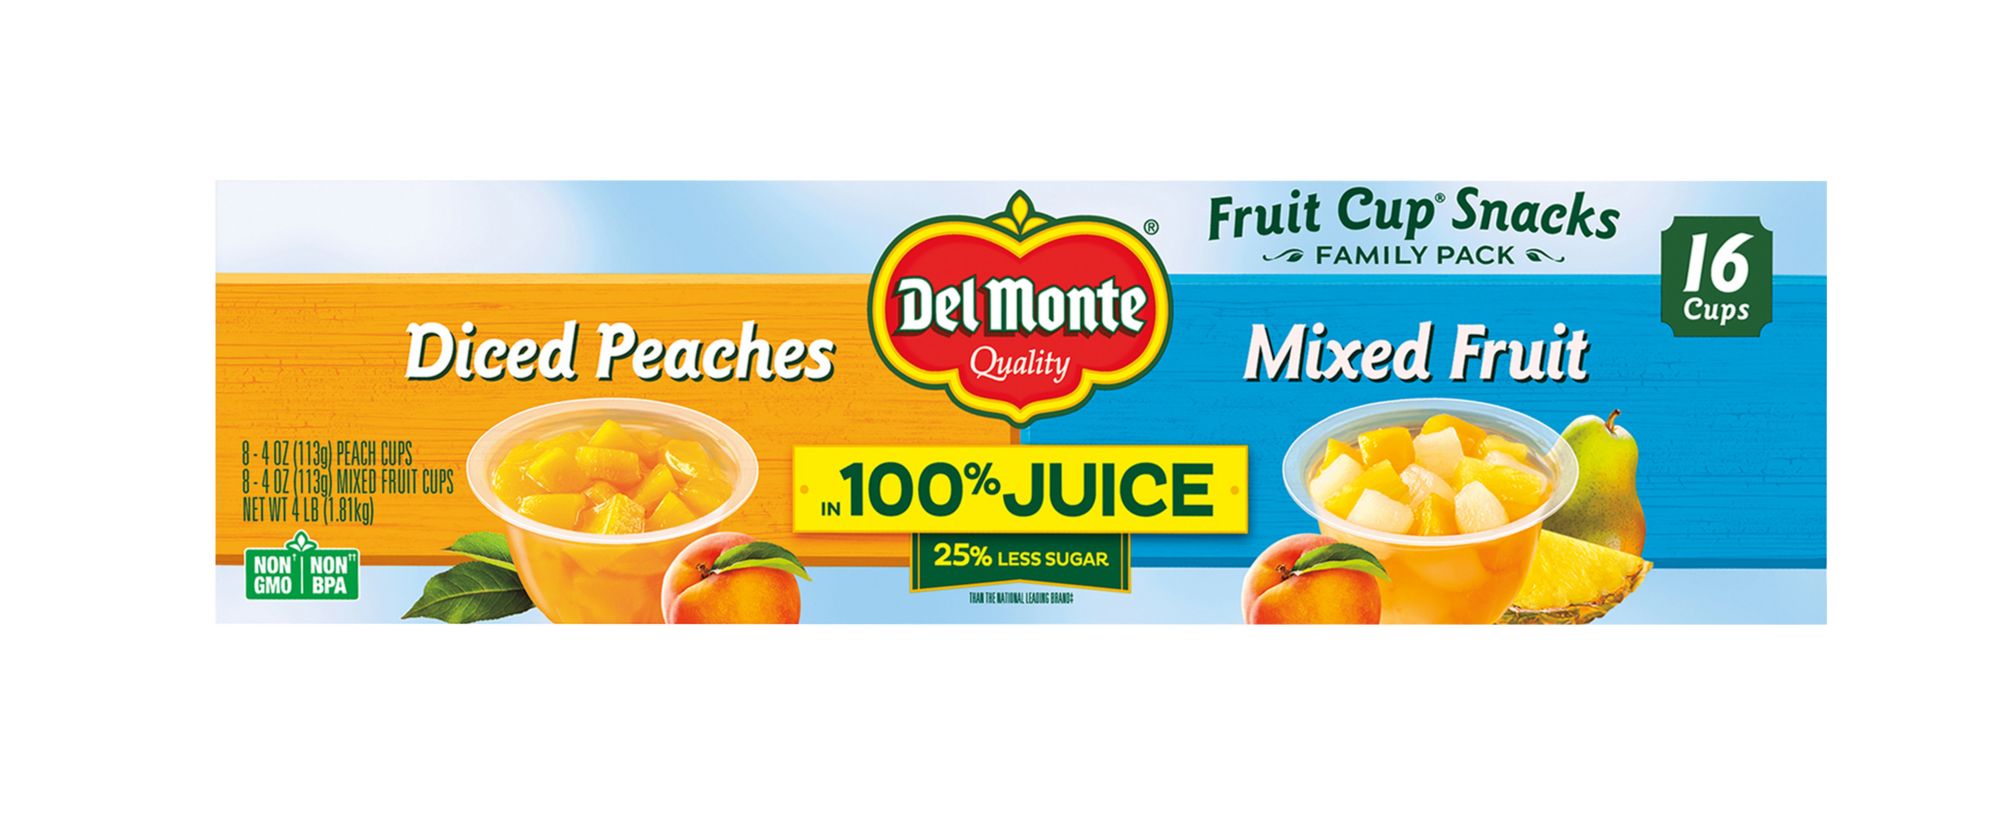 Del Monte® Fruit Cup® Snacks: Cherry Flavored Mixed Fruit in 100% Juice